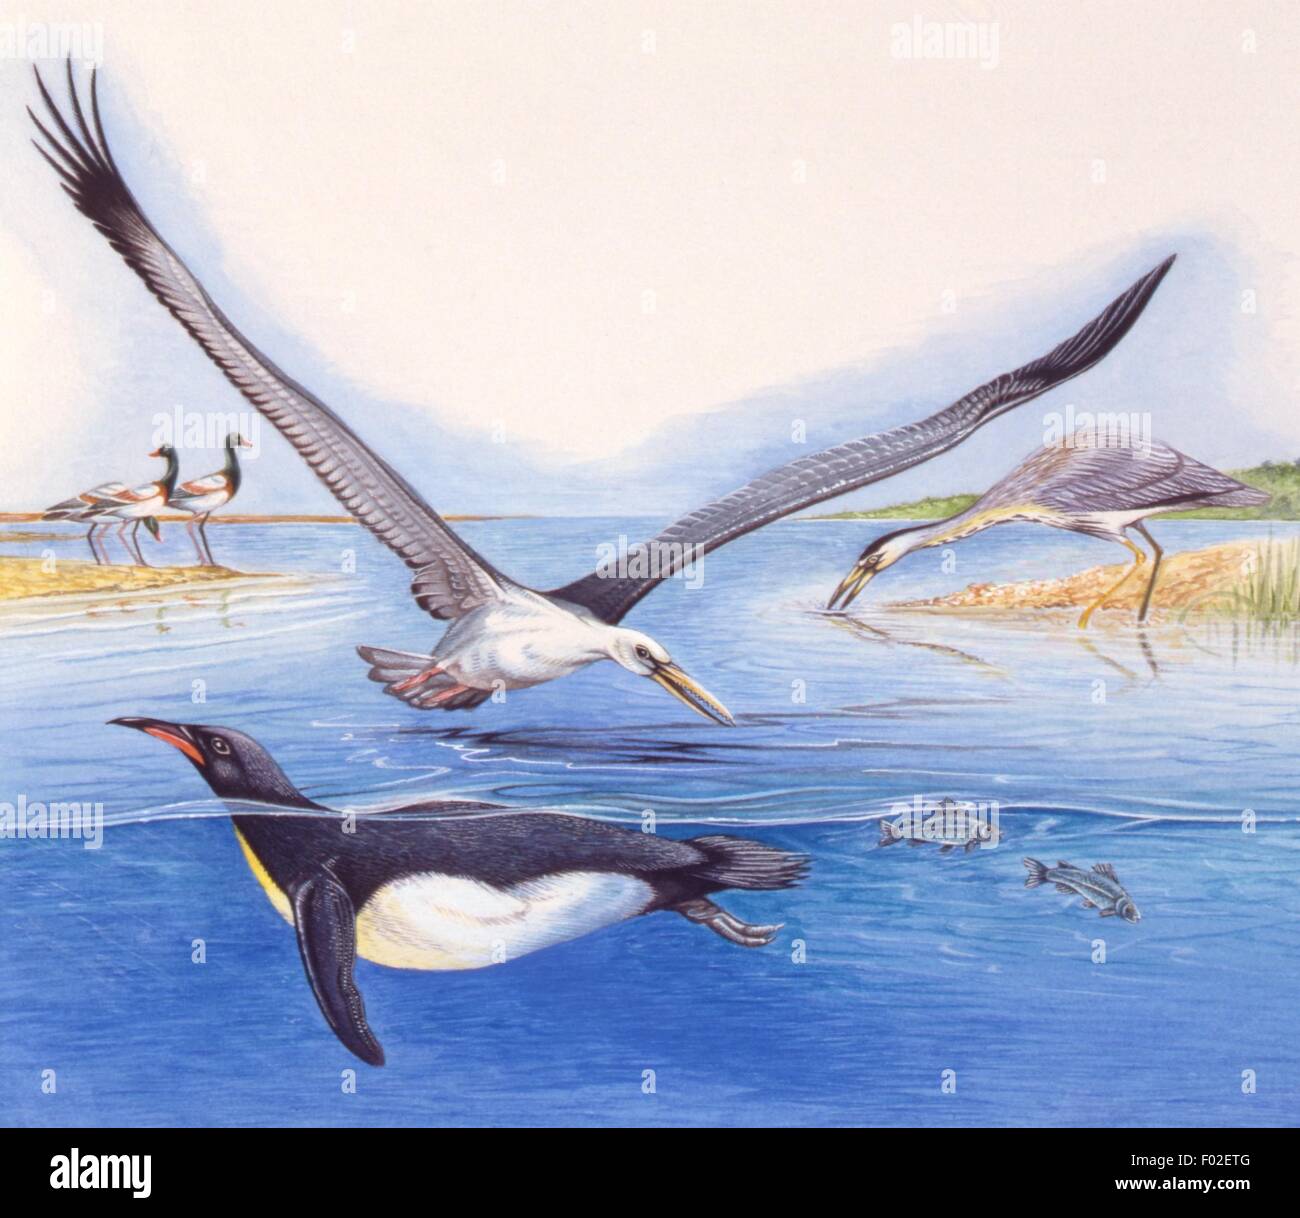 Palaeozoology - Prehistoric birds - Art work Stock Photo